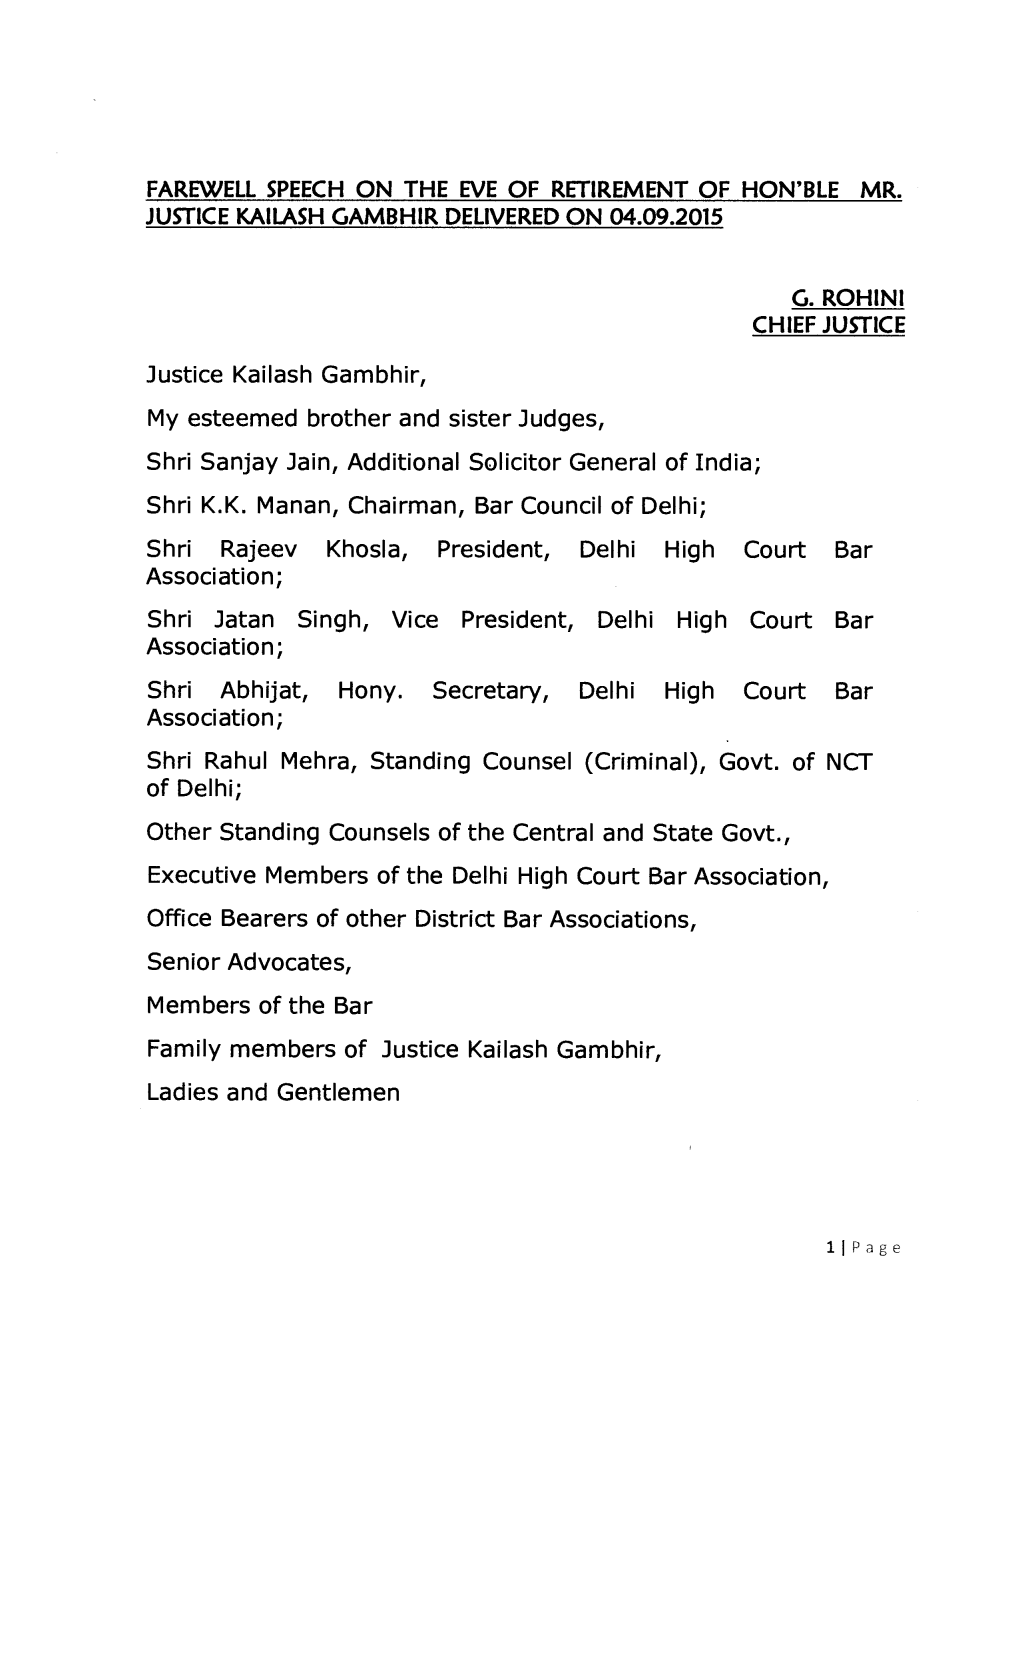 Justice Kailash Gambhir, My Esteemed Brother and Sister Judges, Shri Sanjay Jain, Additional Solicitor General of India; Shri K.K